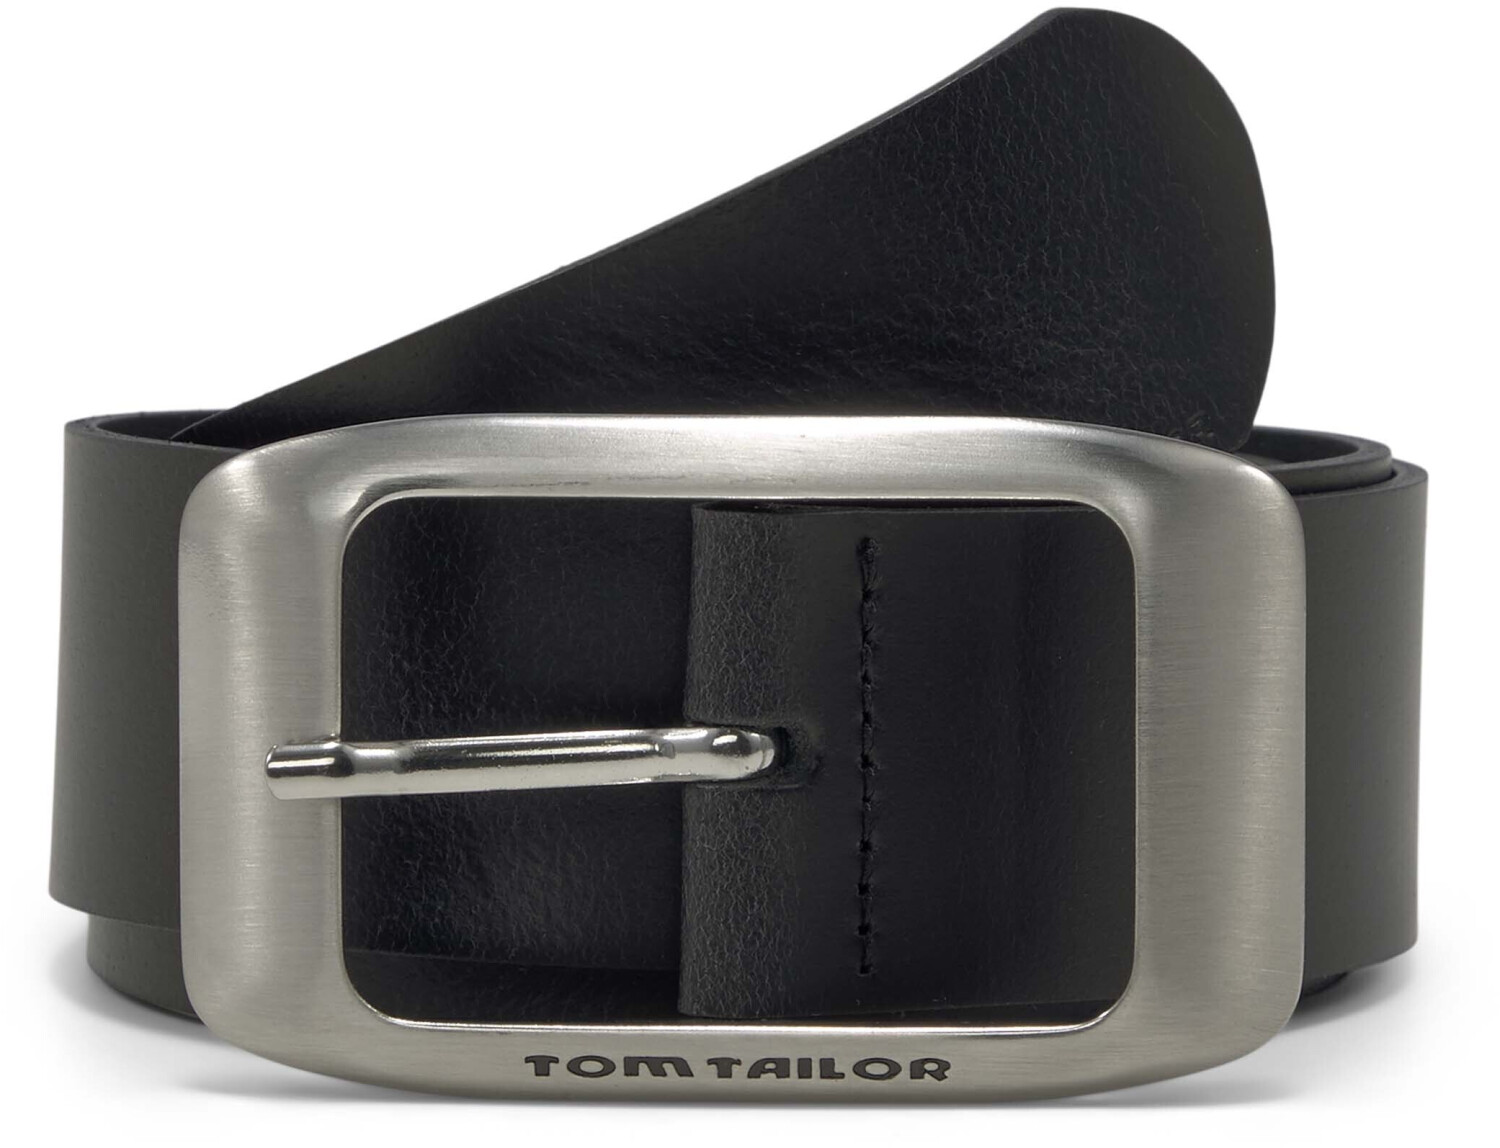 Tom Tailor Gürtel (4016525) black bei Preisvergleich ab uni 22,90 | €